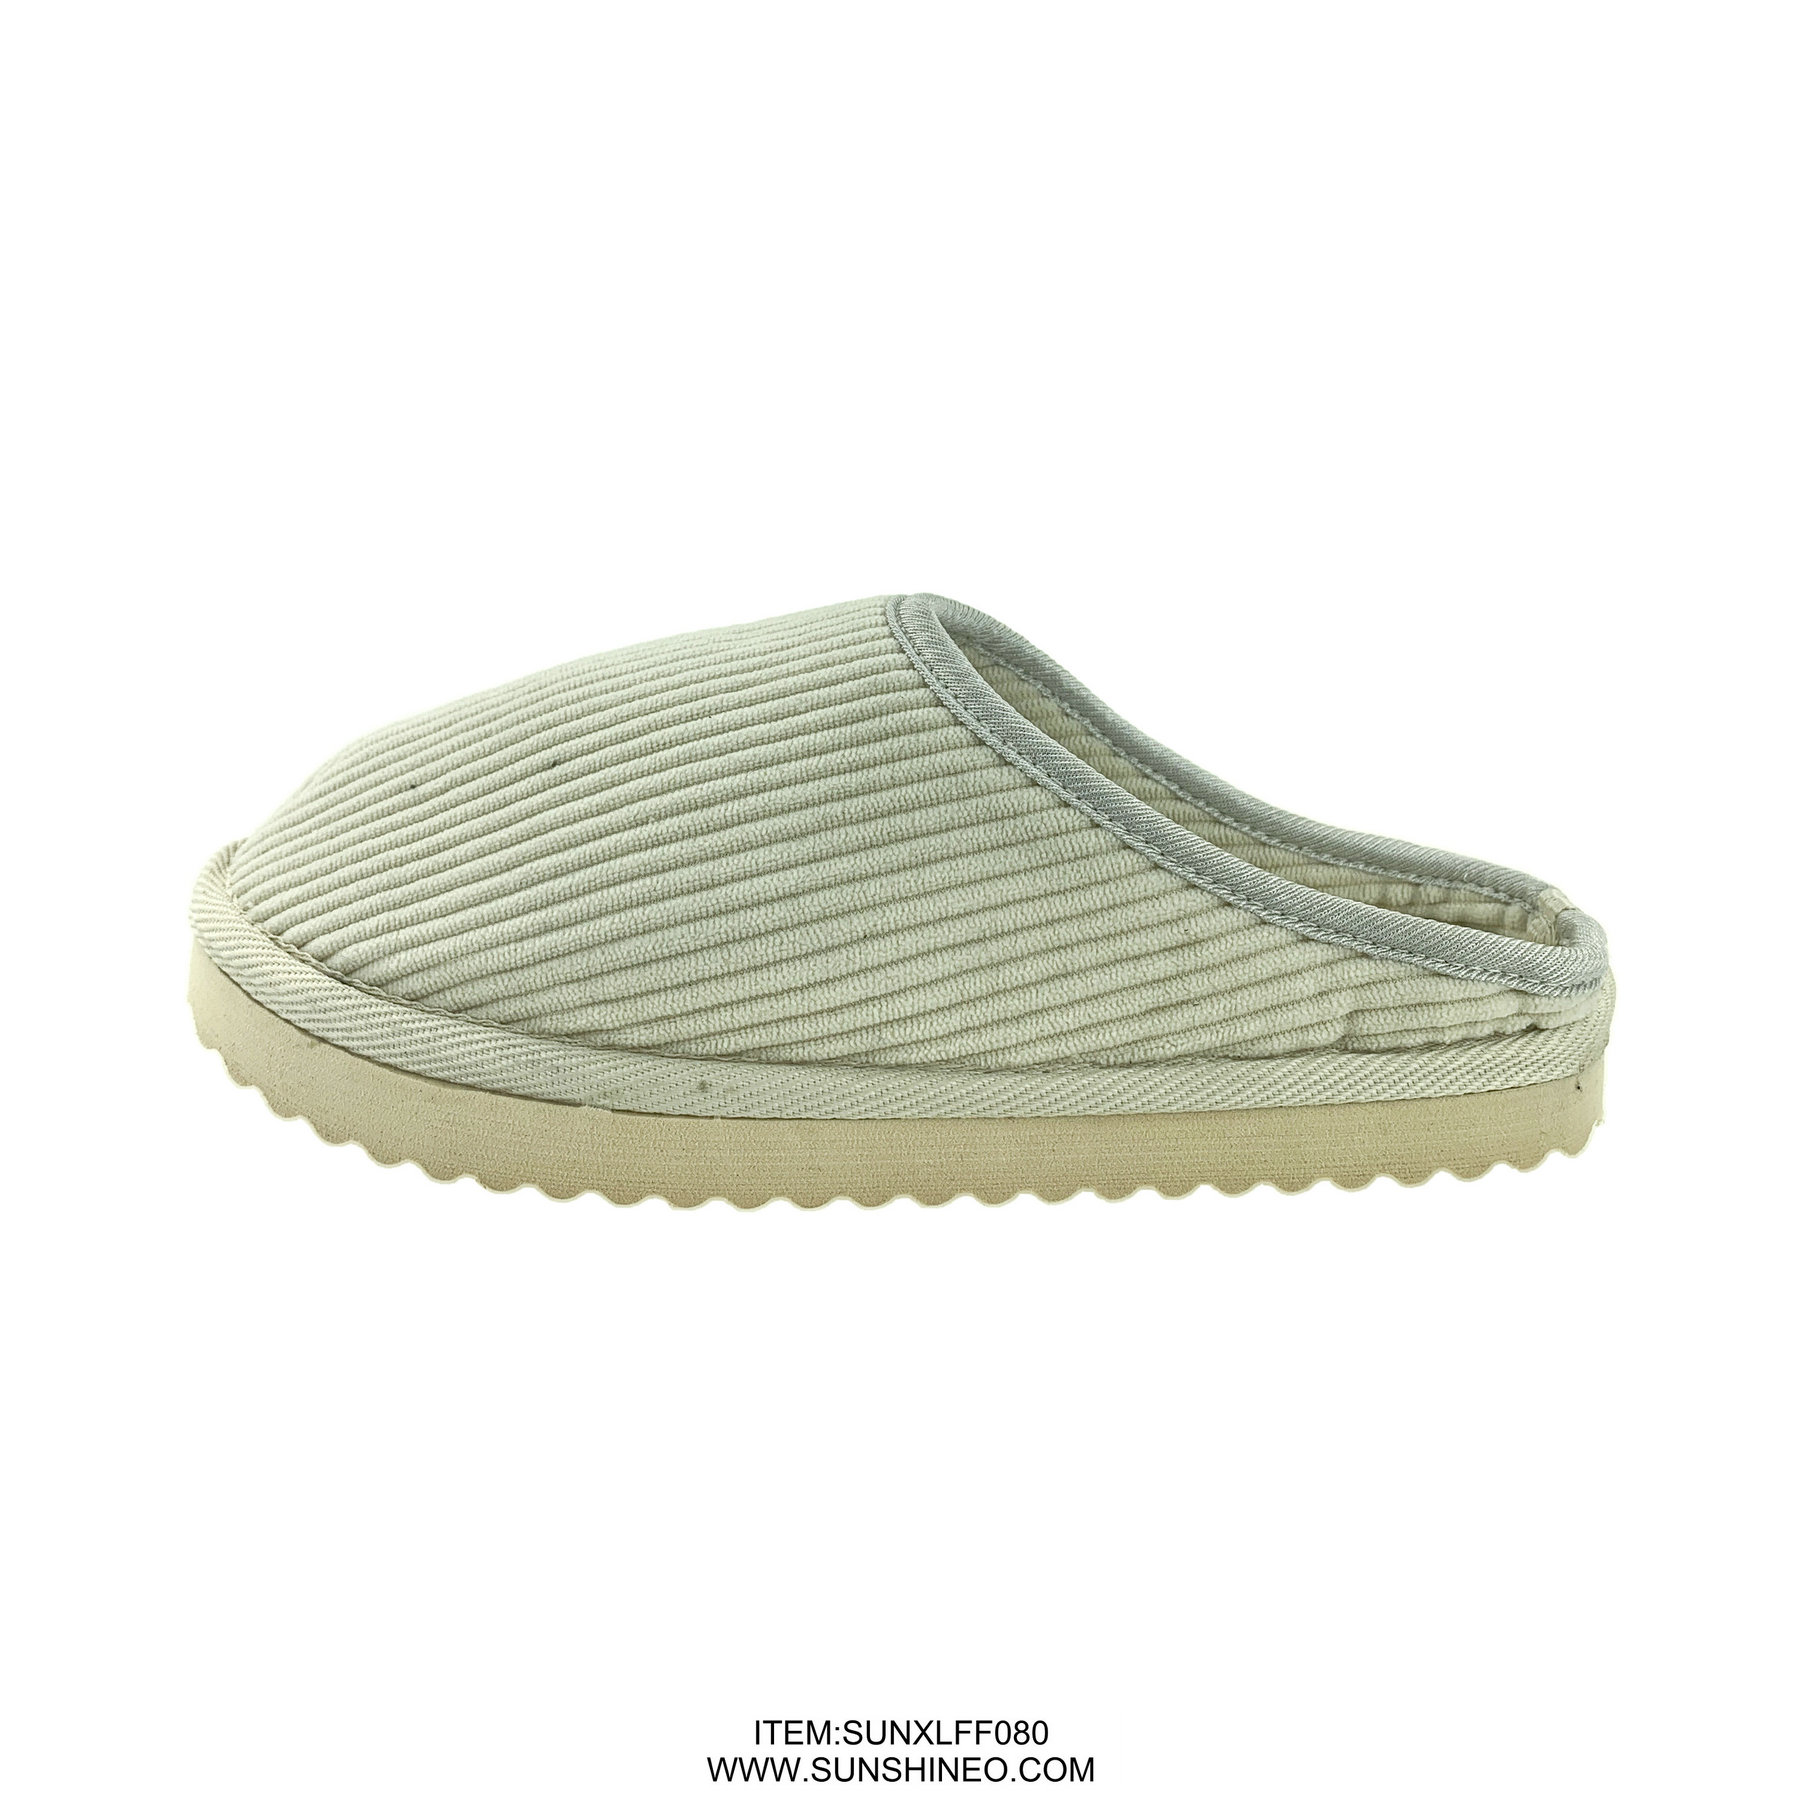 SUNXLFF080 fur flip flop sandals winter slippers